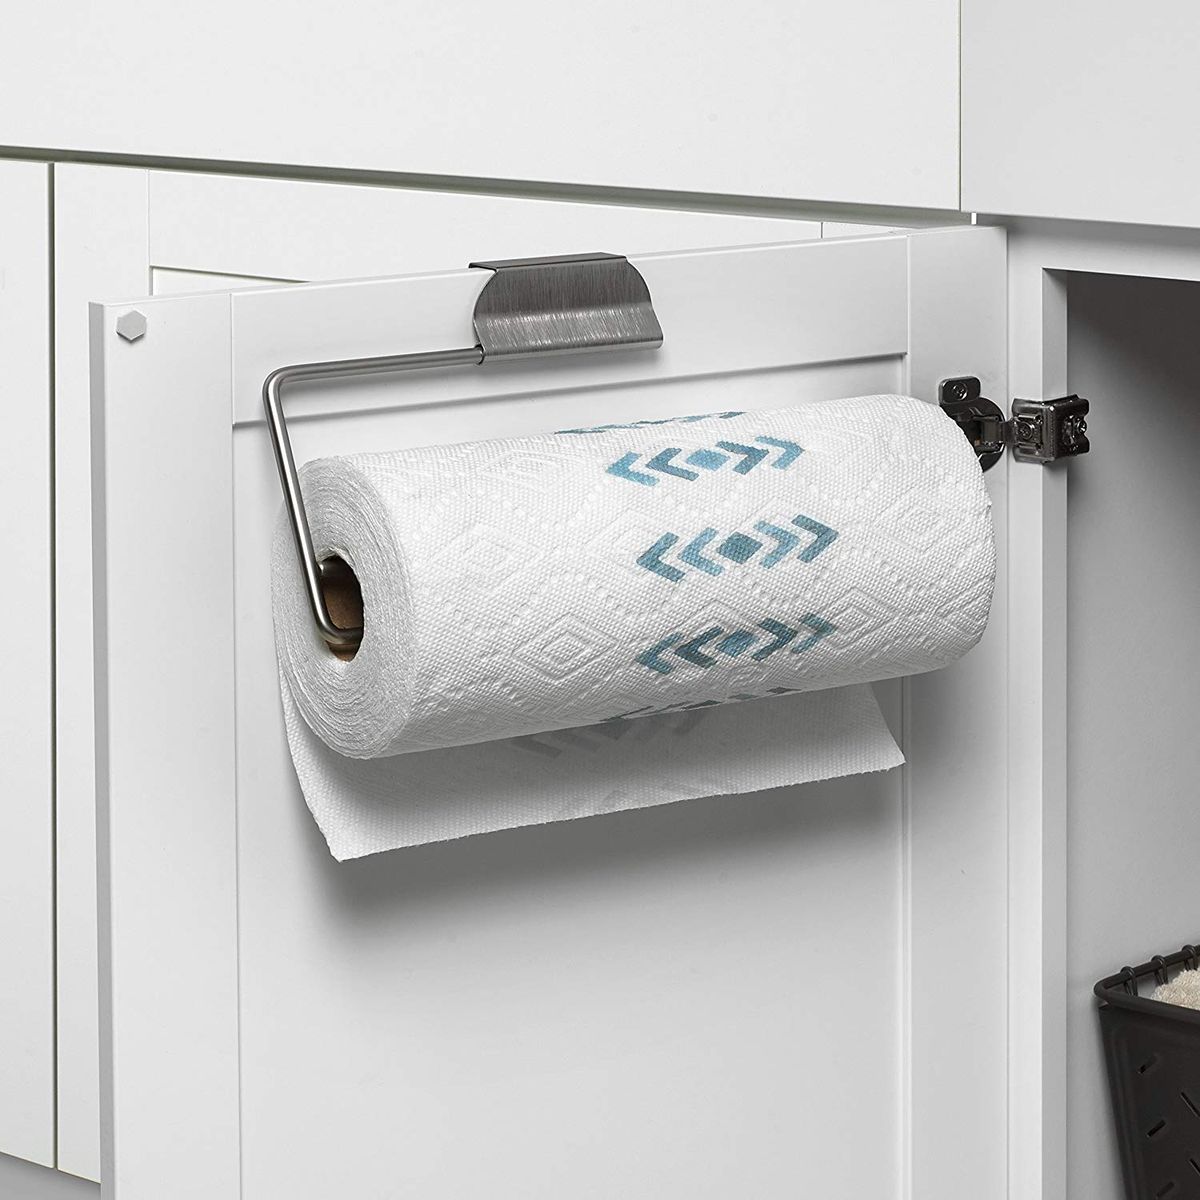 Toilet Paper Holder Toilet Roll Holder Self Adhesive for Bathroom Bedroom Kitchen Self Adhesive Toilet Paper Towel Holder Black Stainless Steel Roll Paper Holder